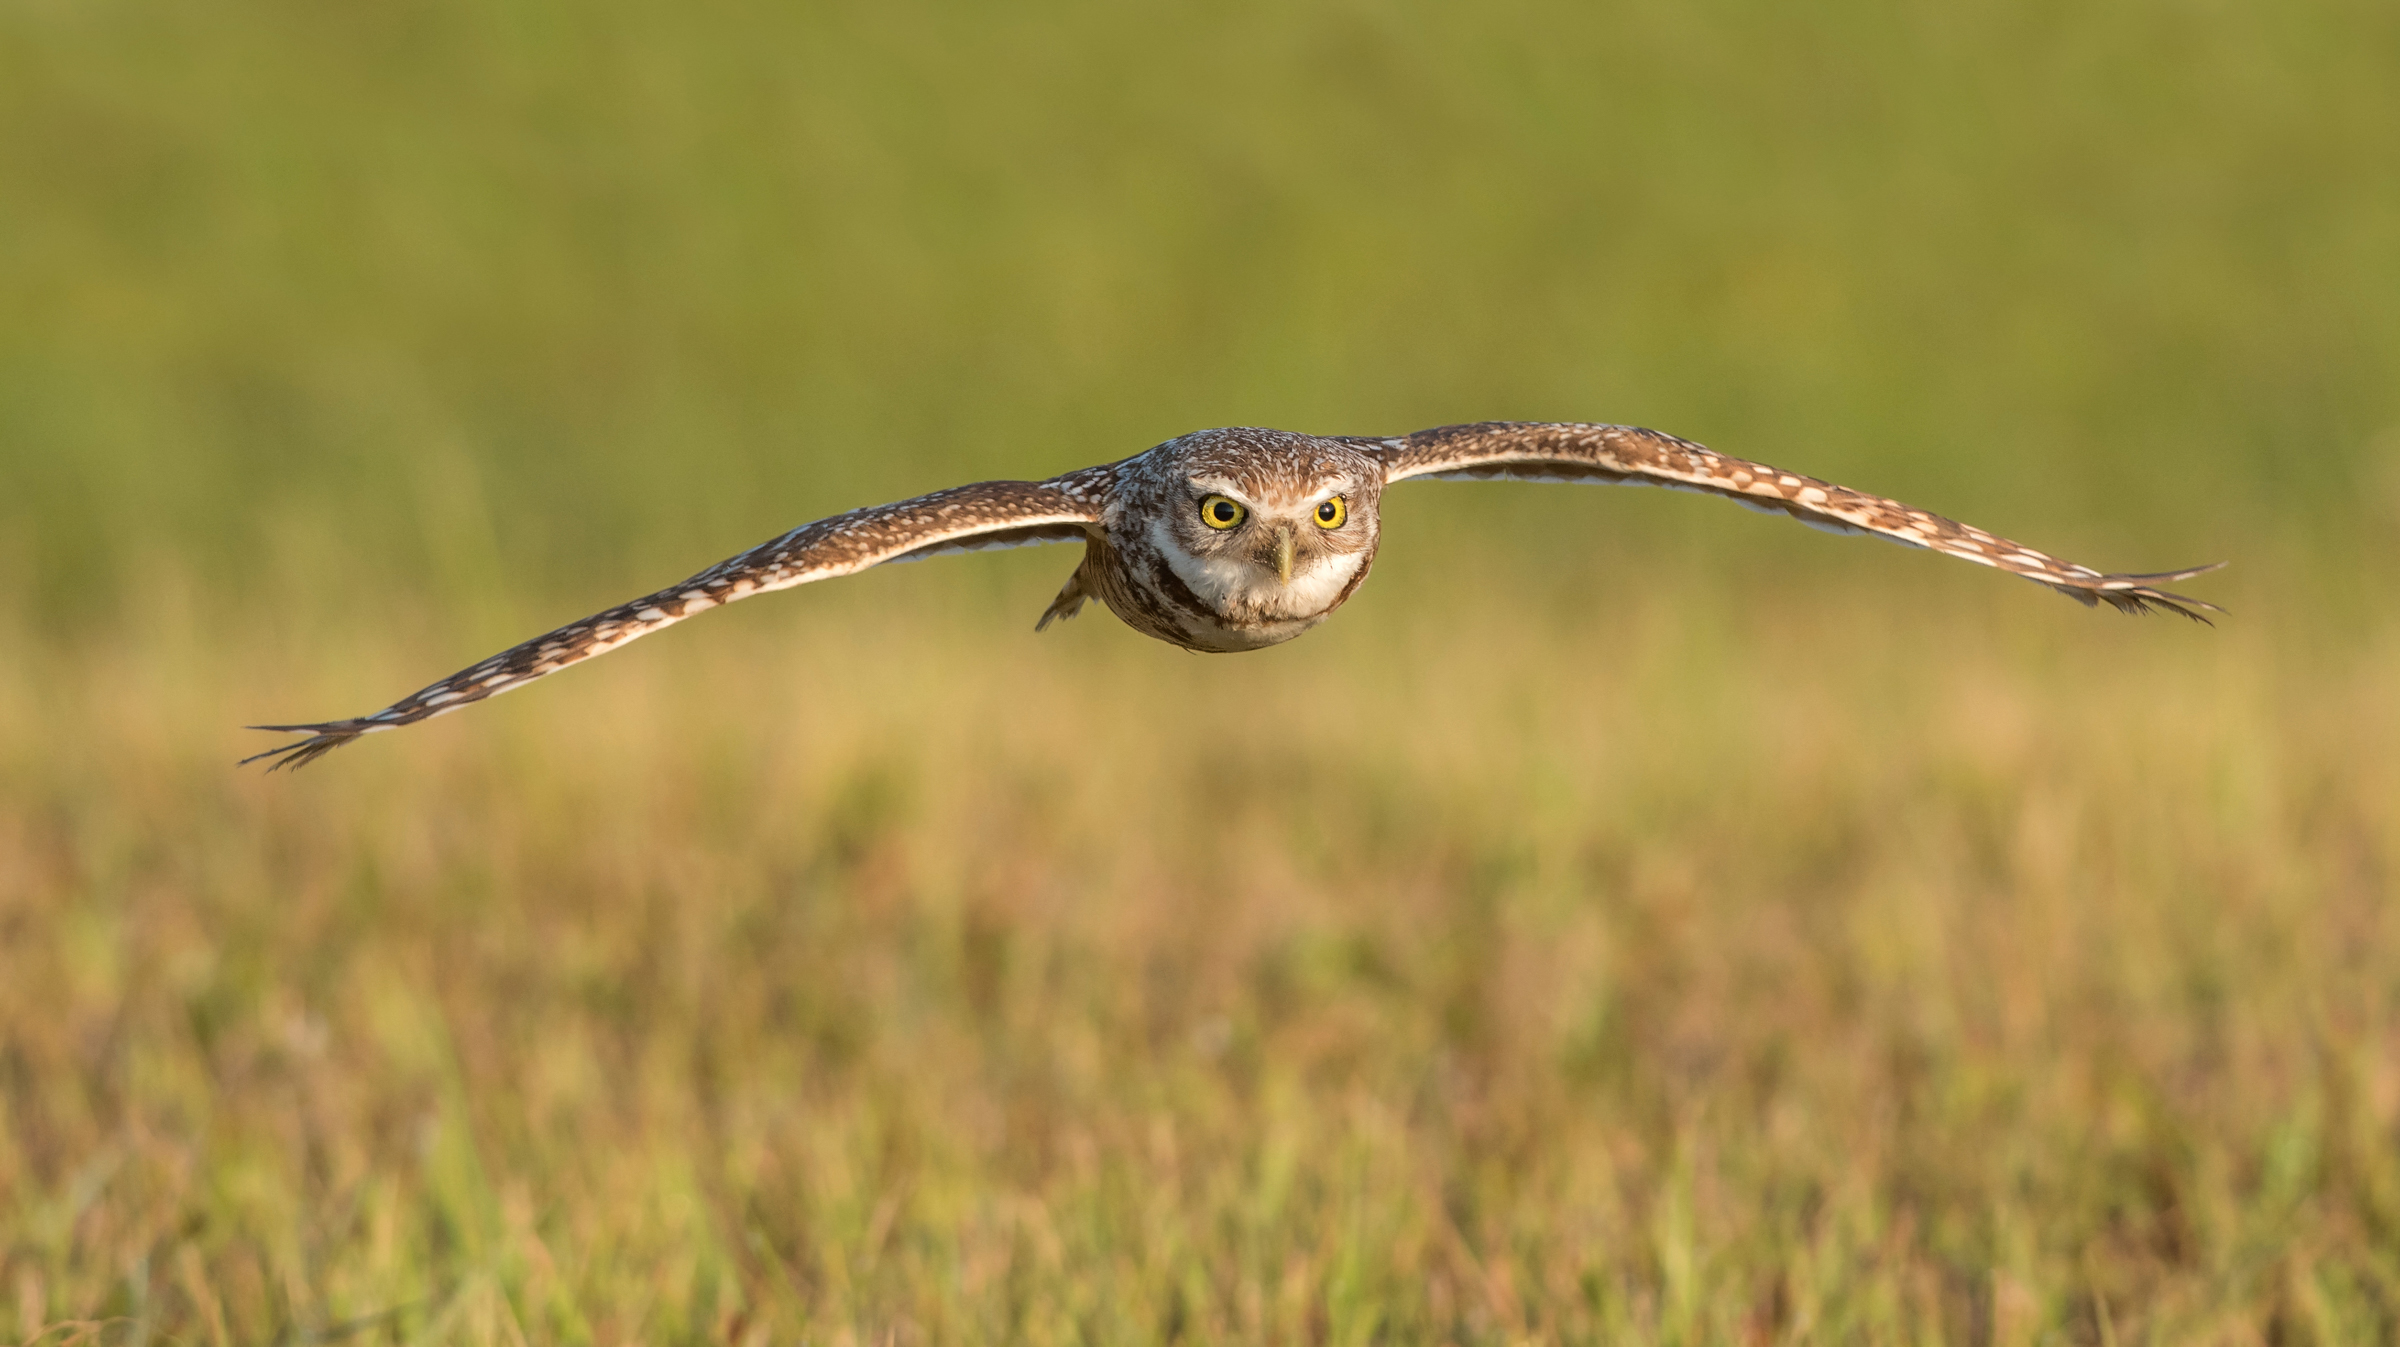 Burrowing Owl in flight over a field. Photo: Petter Brannon/Audubon Photography Awards.